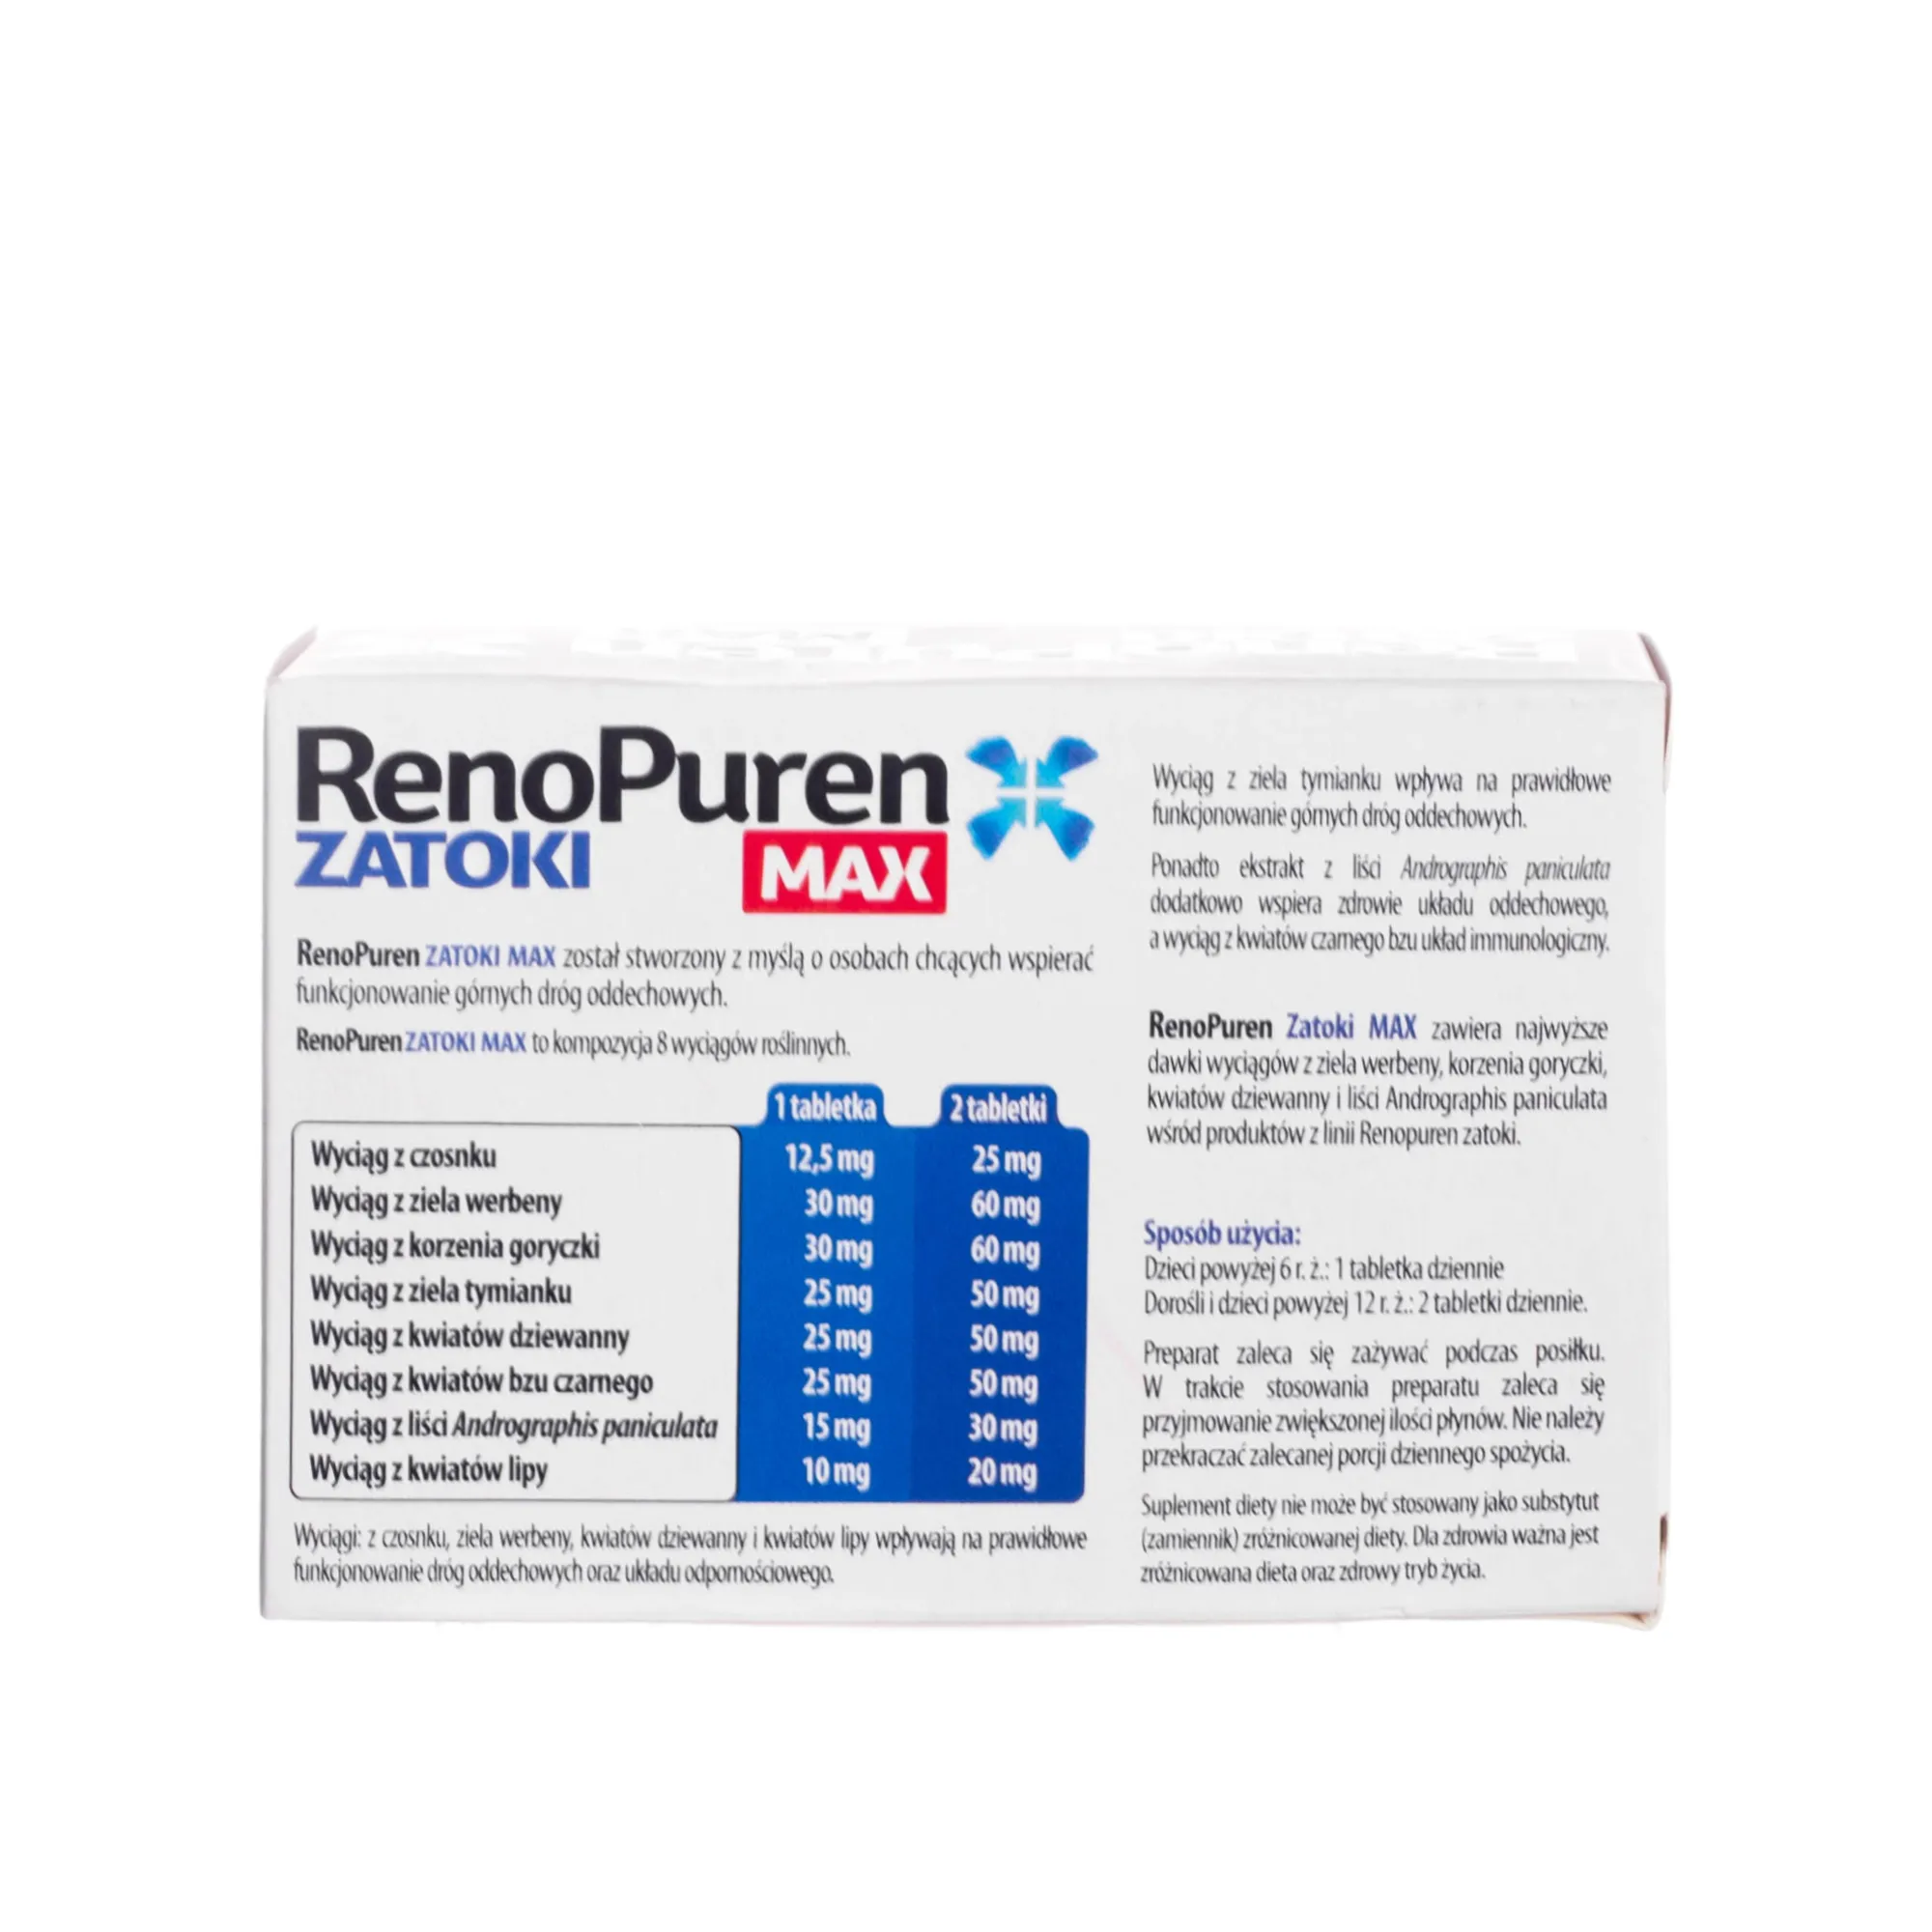 RenoPurenMAX Zatoki, suplement diety, 60 tabletek 